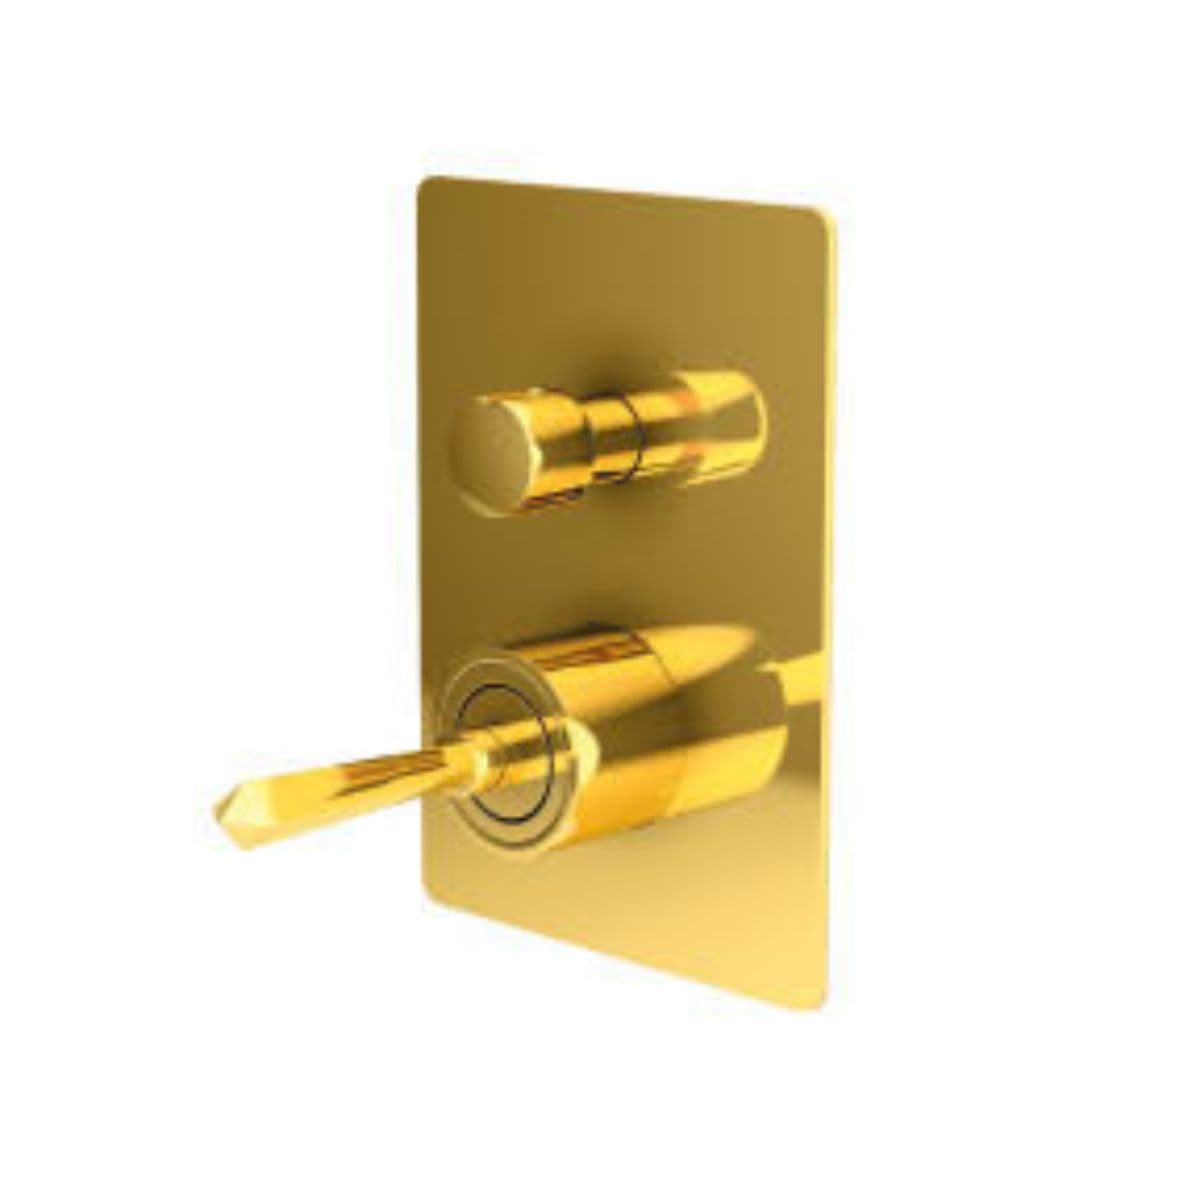 AURA GOLD Concealed Diverter 3 Outlets with Trim Handle - Colston - Aura GOLD - Concealed Diverter (3 Outlets) with Trim & Handle